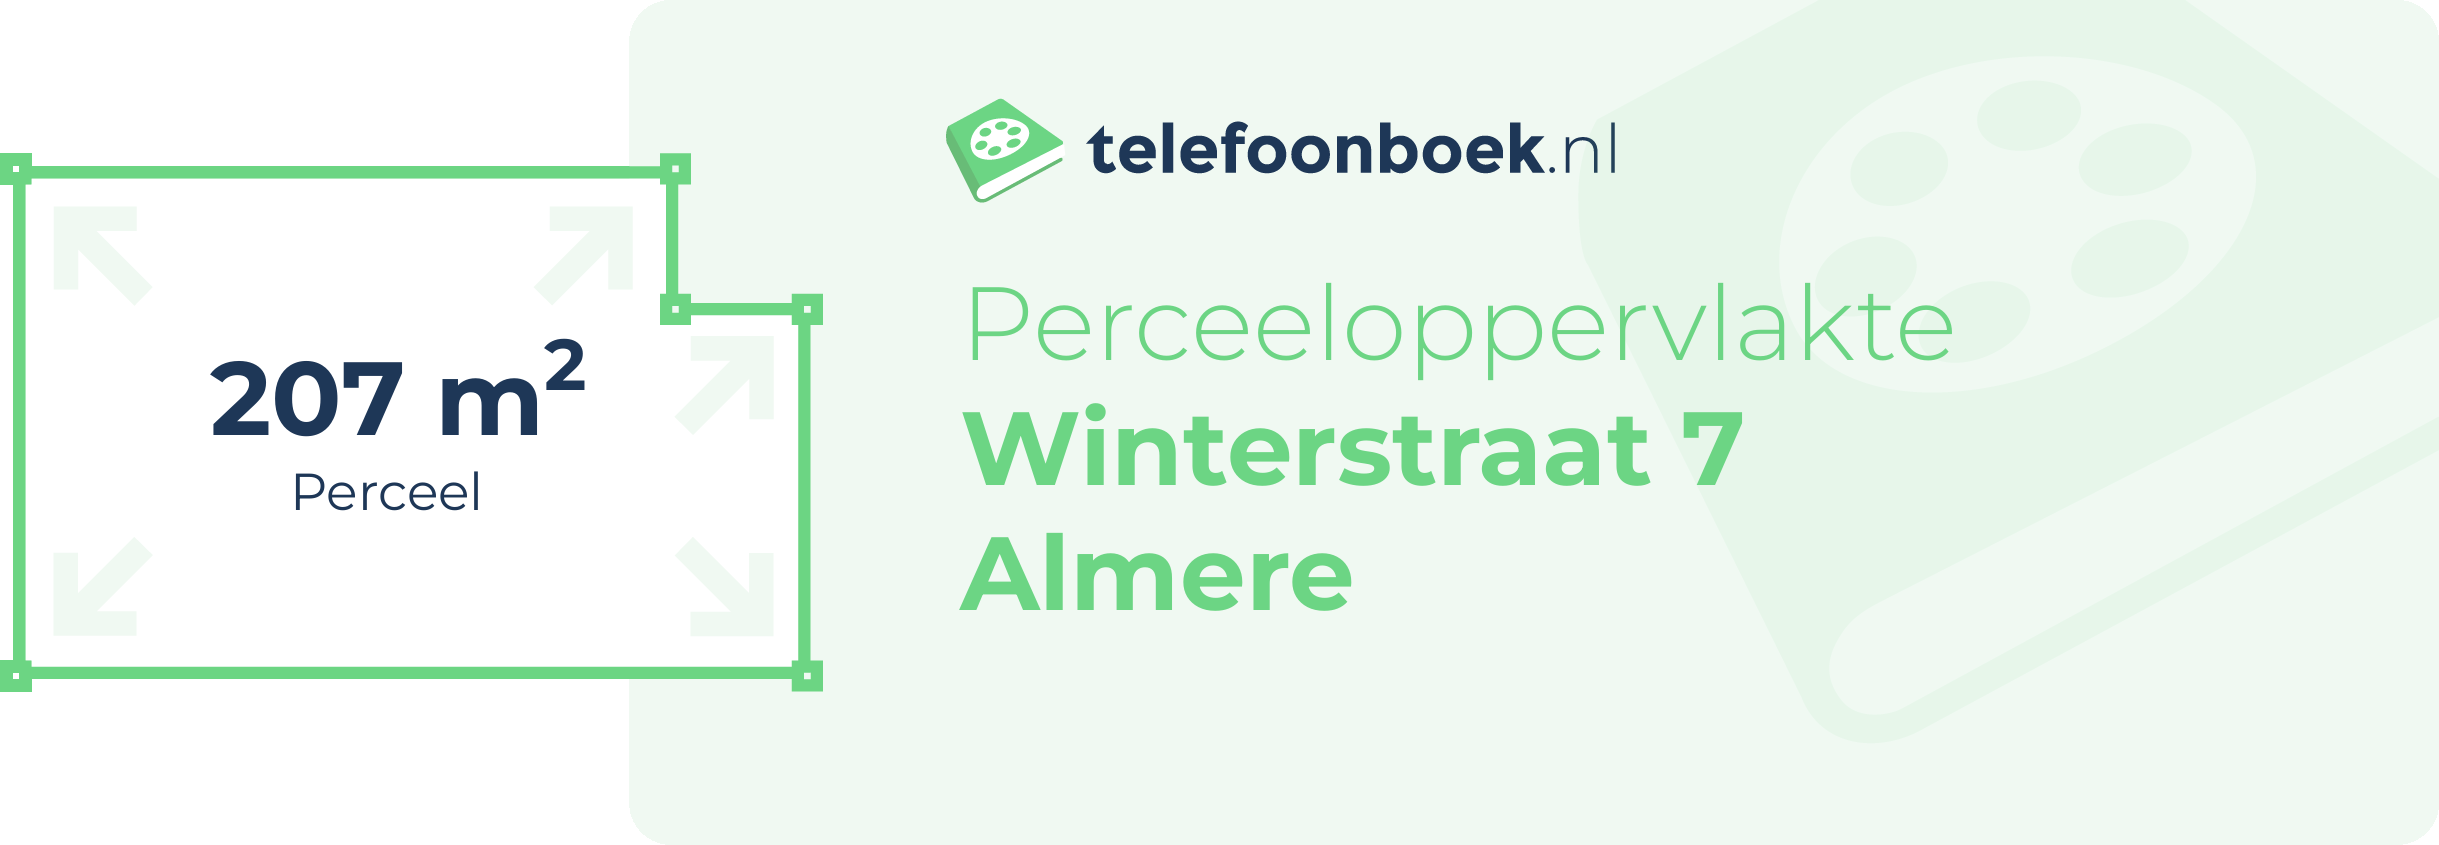 Perceeloppervlakte Winterstraat 7 Almere